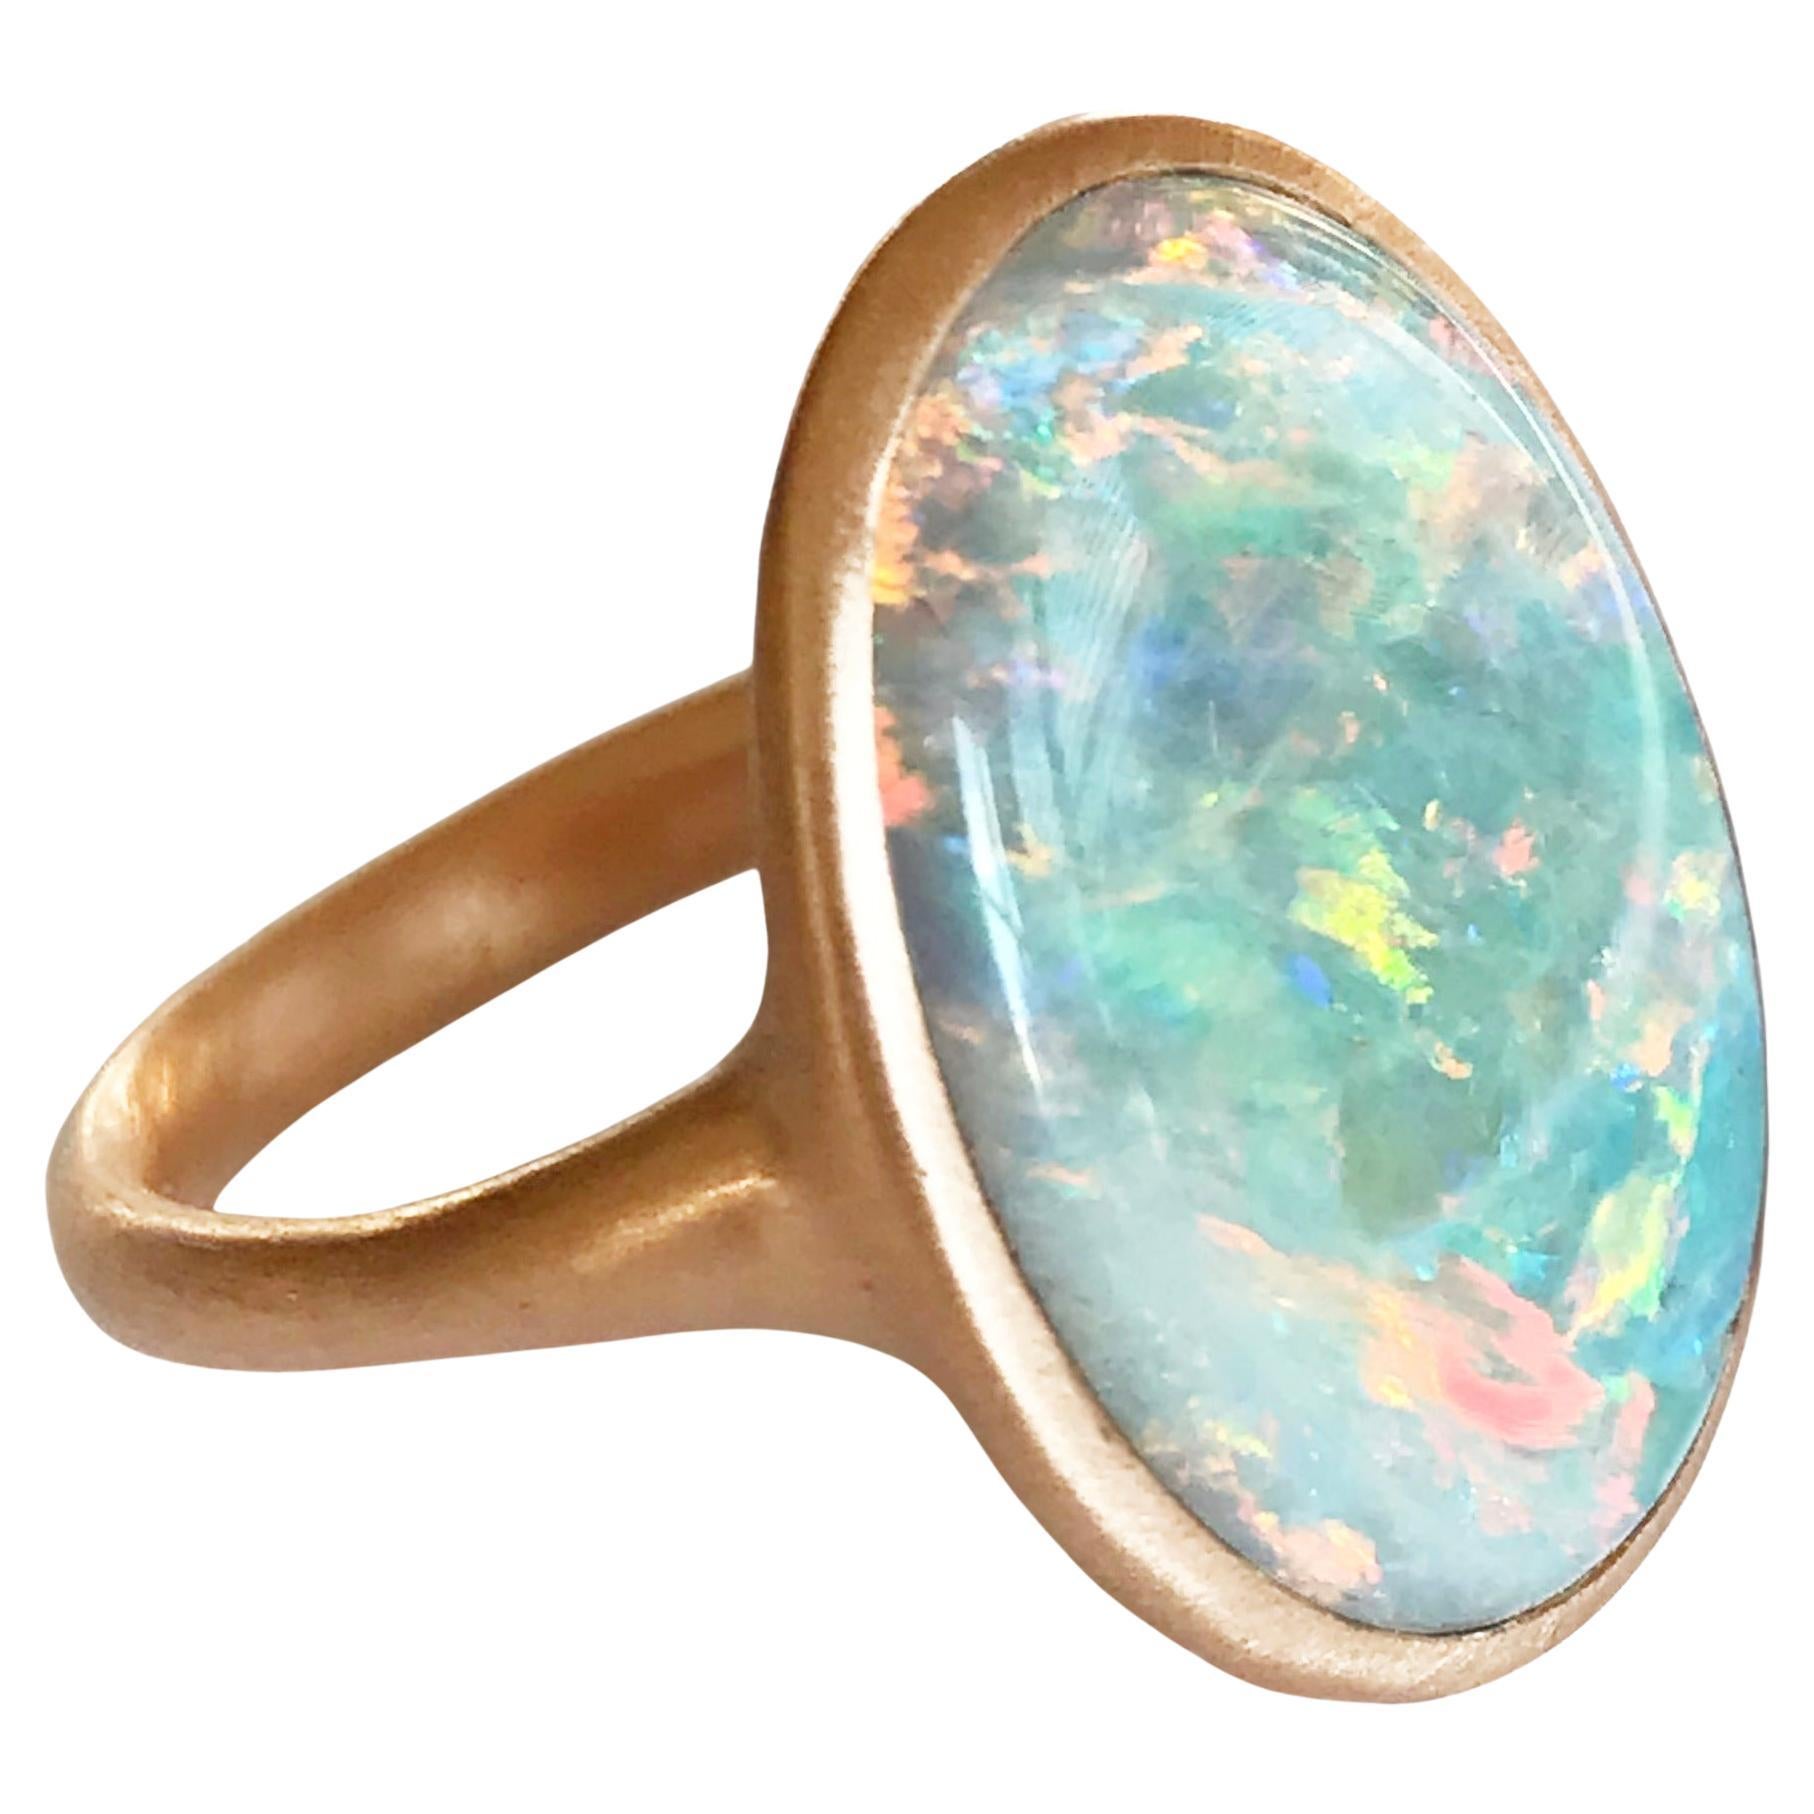 Dalben Rose Gold Ring and Australian Coober Pedy Opal